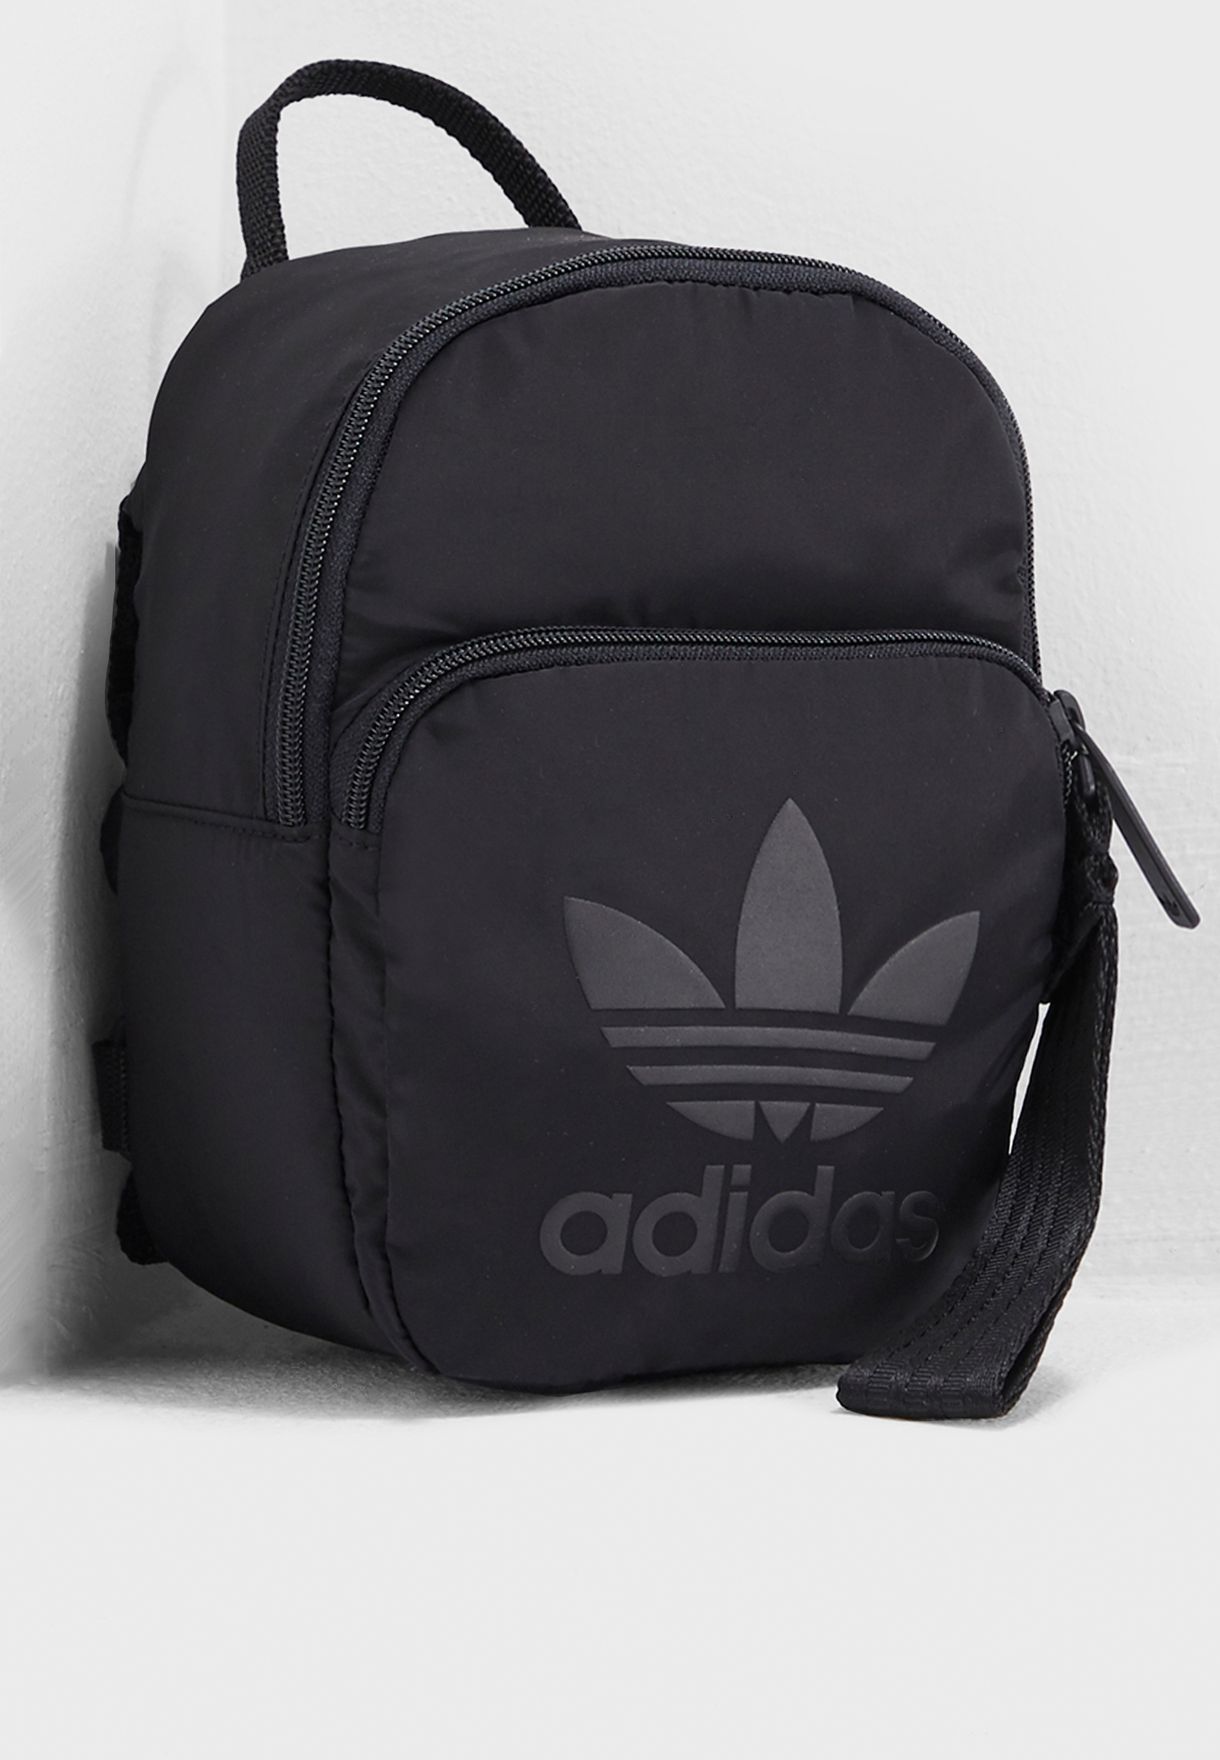 adidas originals extra small backpack